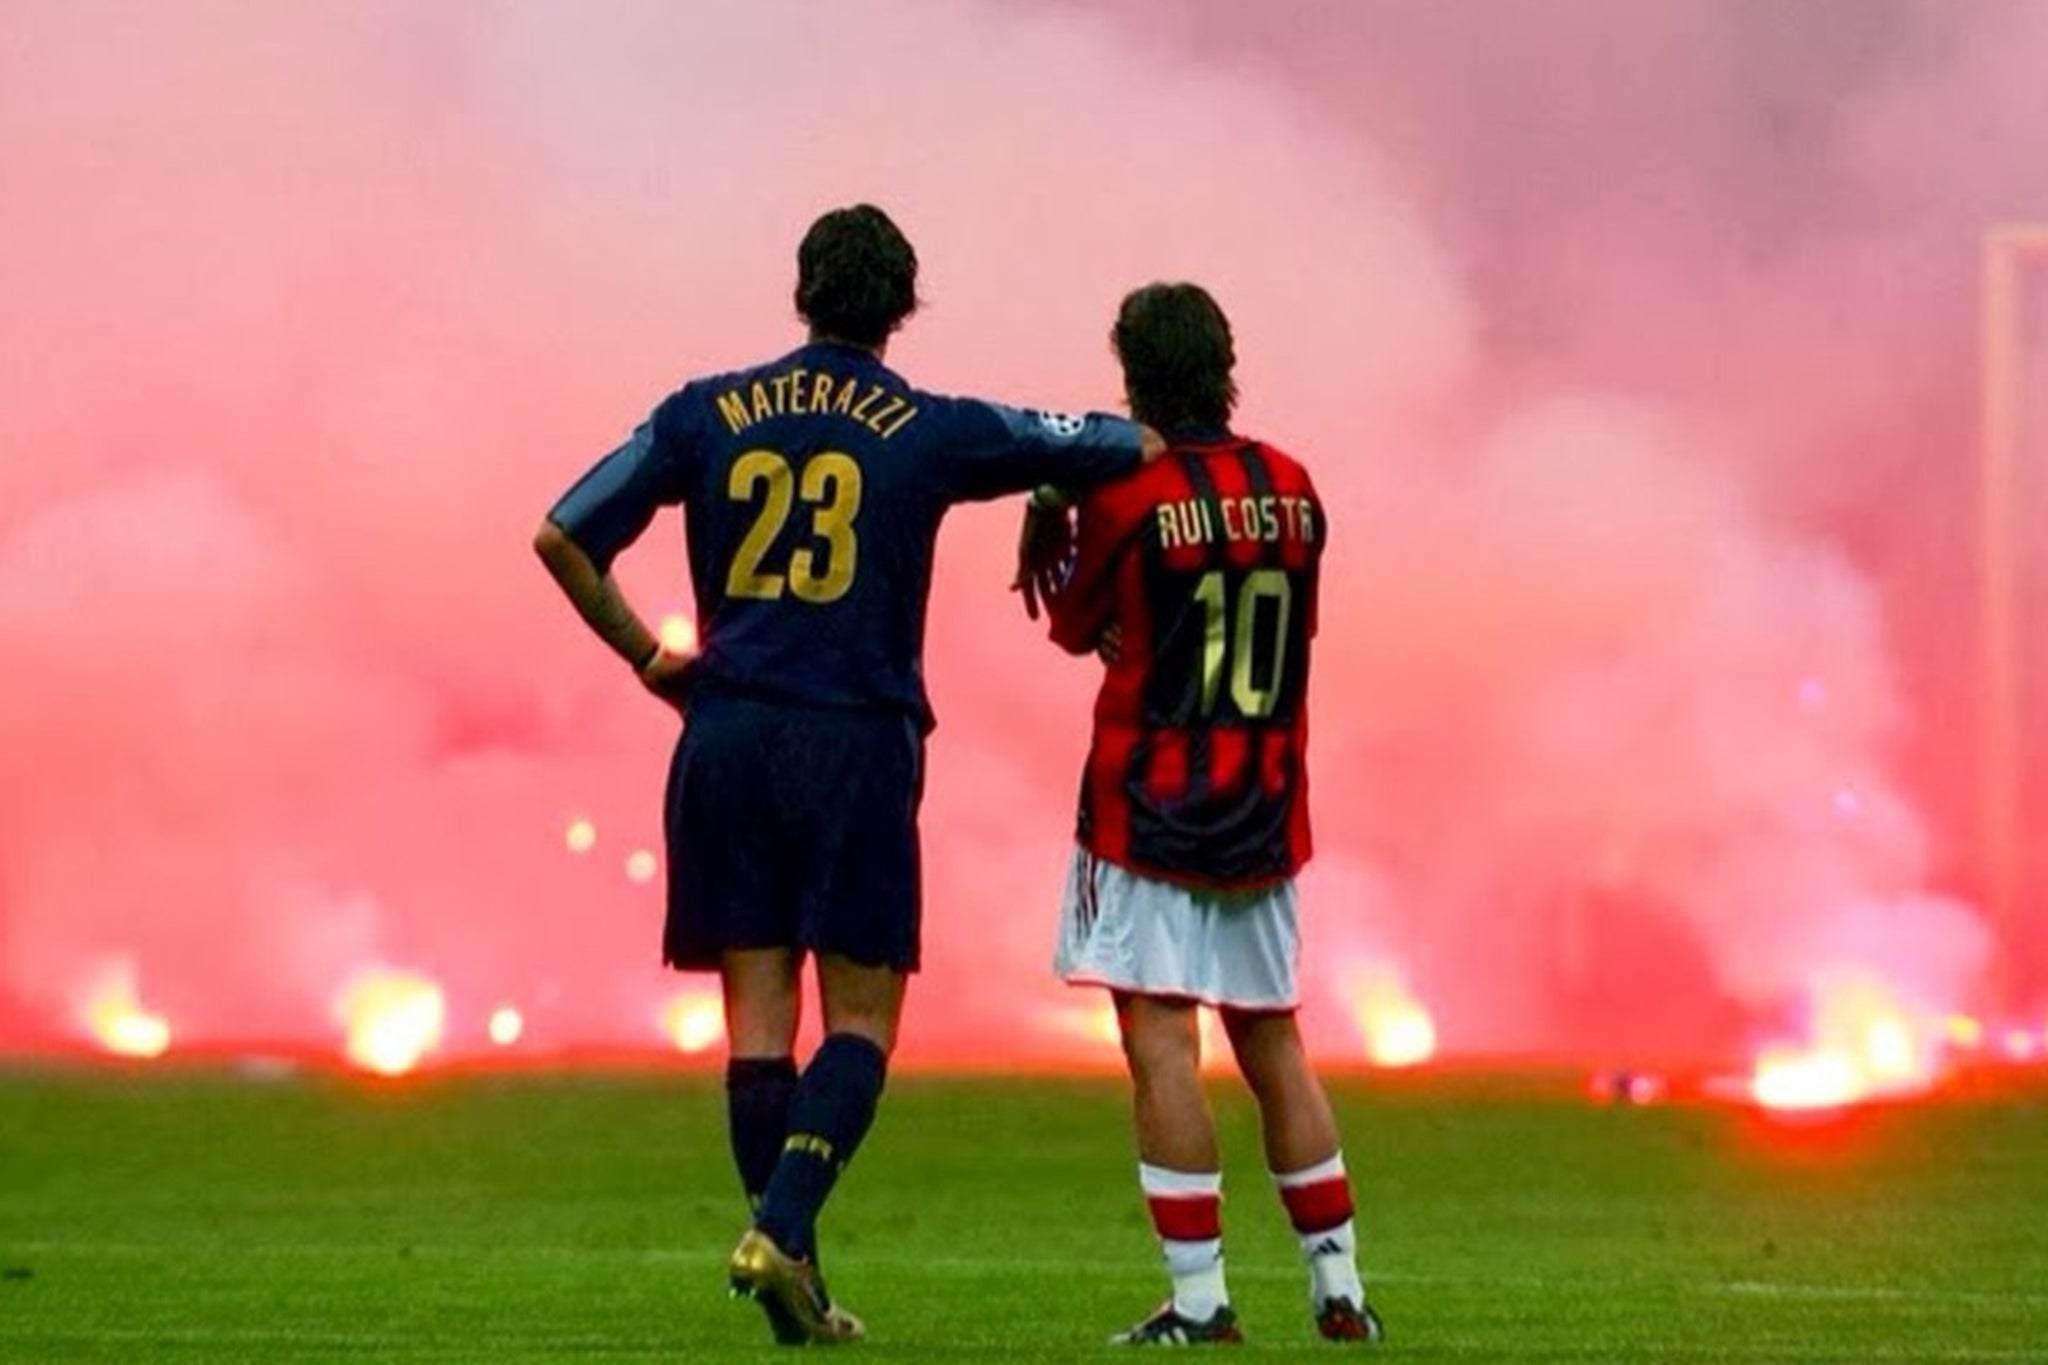 Marco Materazzi and Rui Costa, photographed in 2005 by Stefan Rellandini